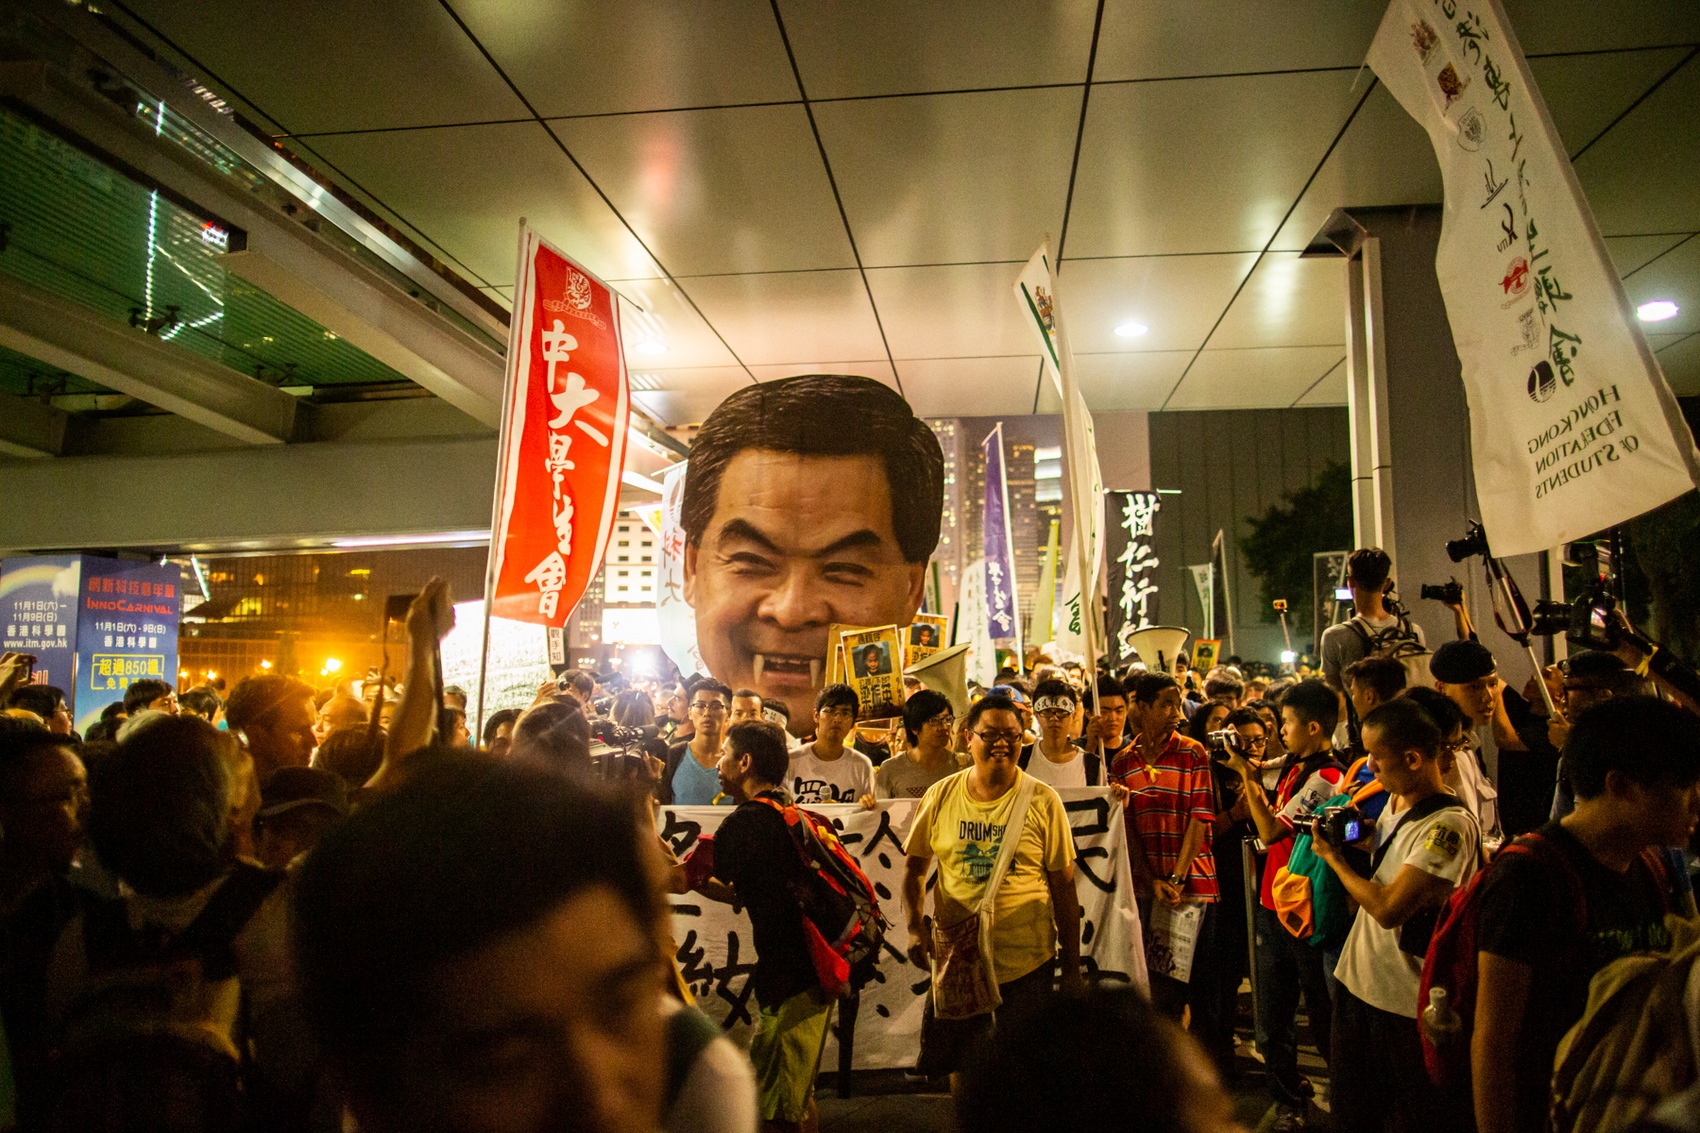 7_todd-r-darling-documentary-photographer-hong-kong-umbrella-movement-democracy-protest-human-rights